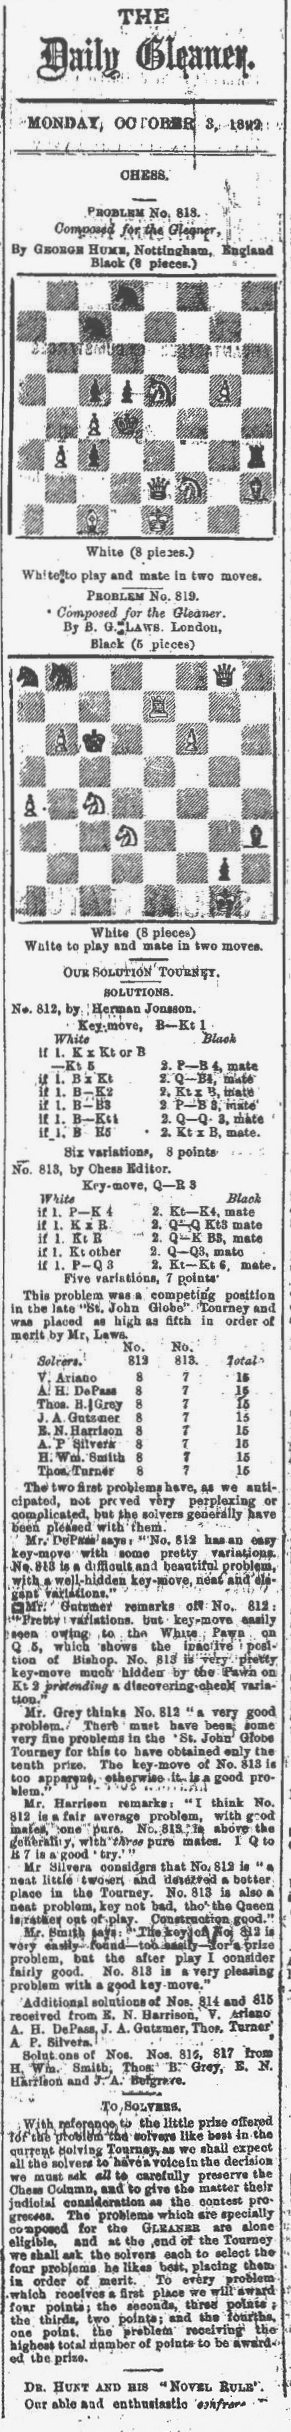 1892.10.03-01 Kingston Daily Gleaner.png